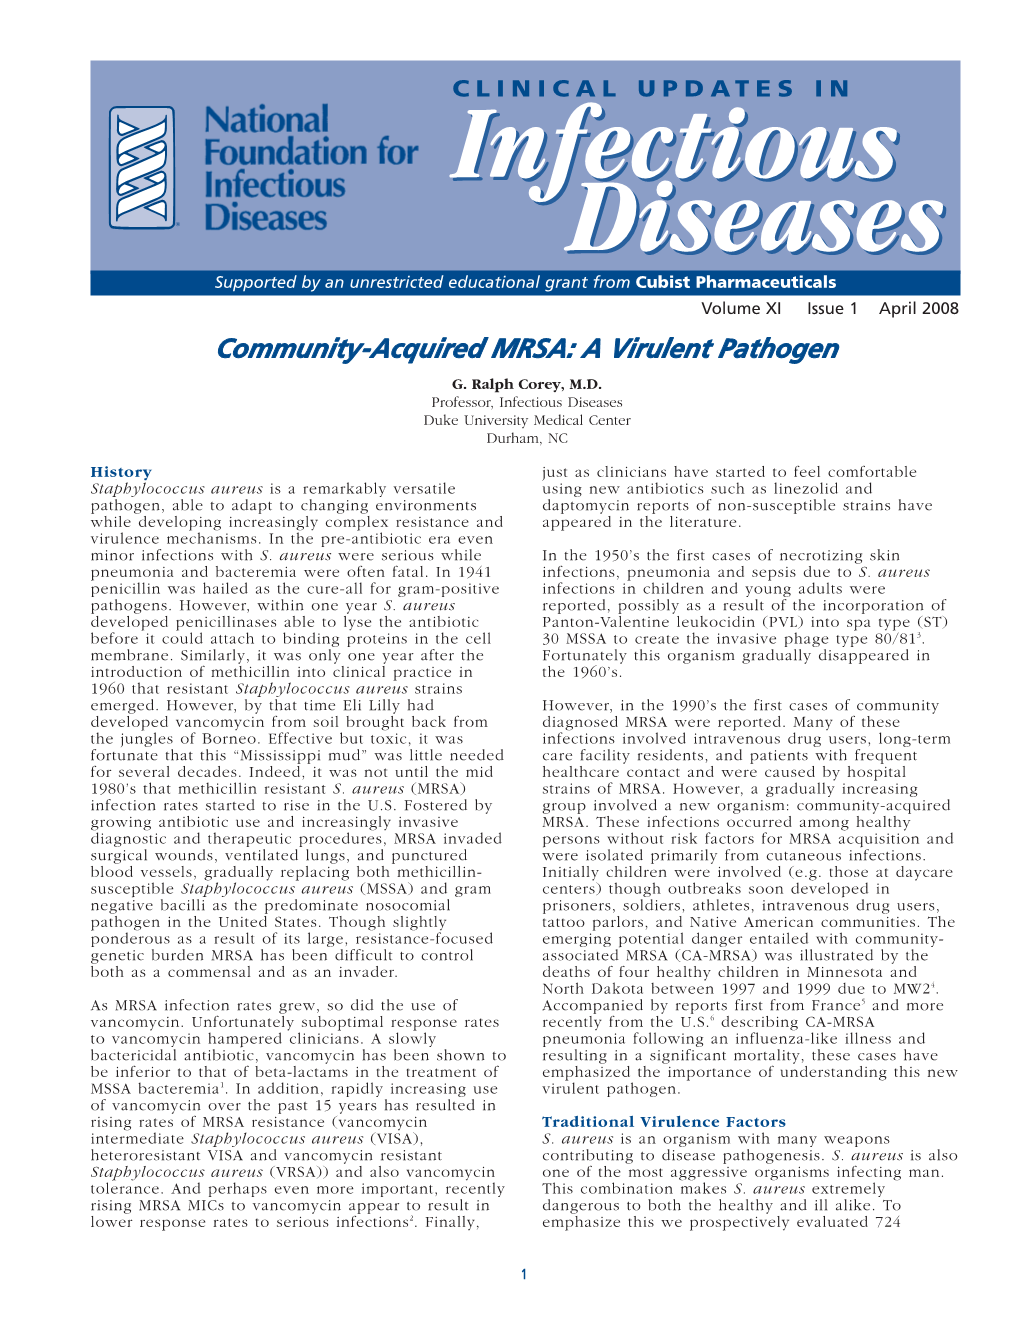 Community-Acquired MRSA: a Virulent Pathogen G